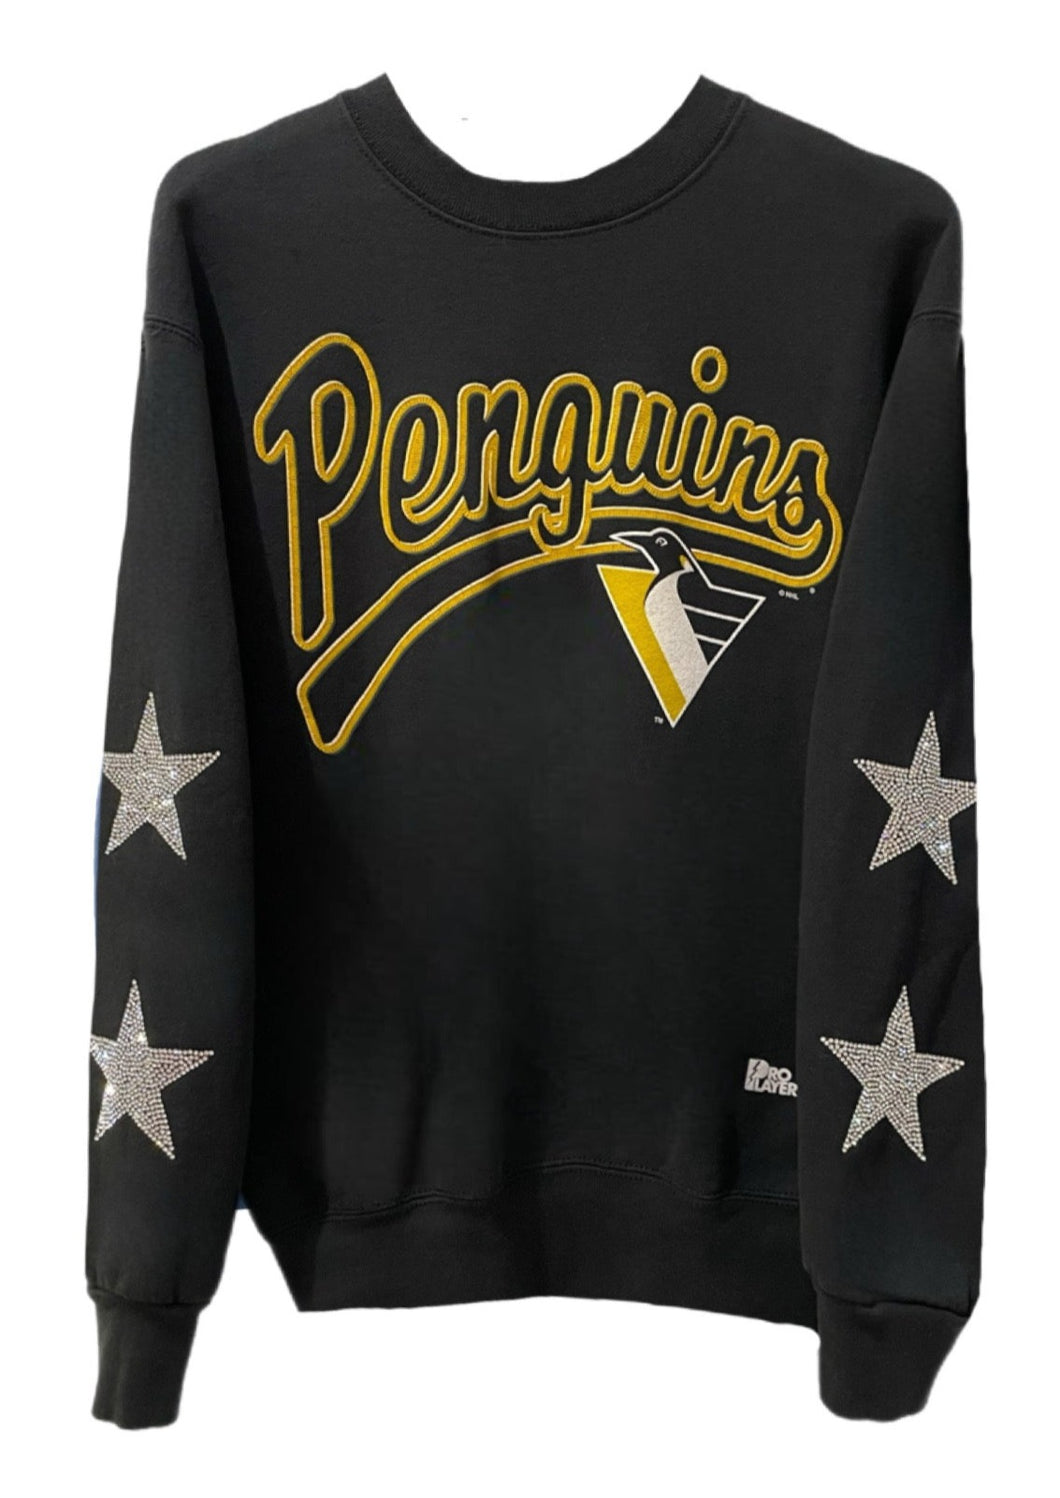 Pittsburgh Penguins, NHL One of a KIND Vintage Sweatshirt with Crystal Star Design